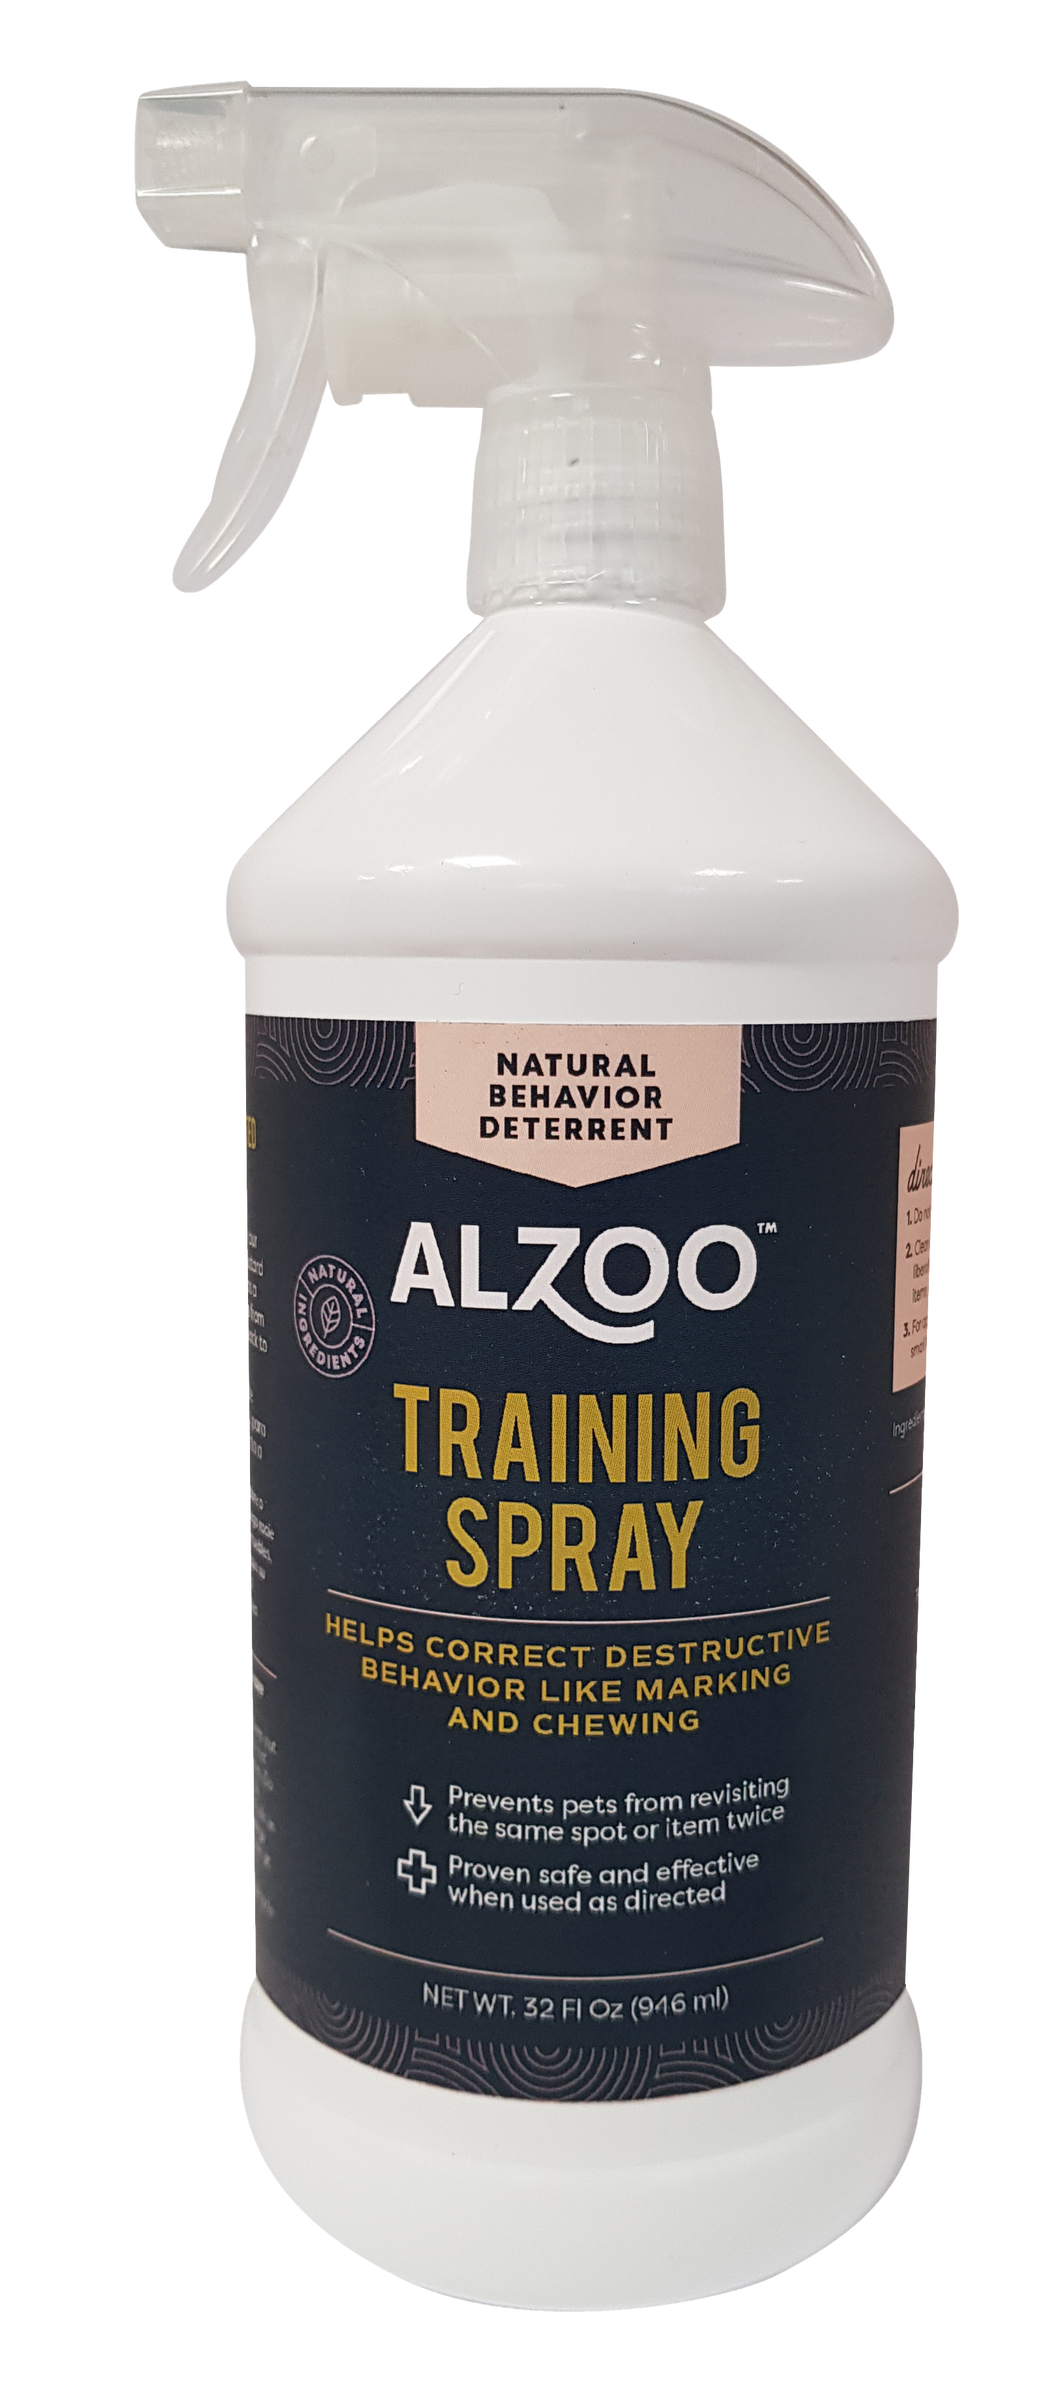 ALZOO Training Spray Natural Behavior Deterrent 32 oz.